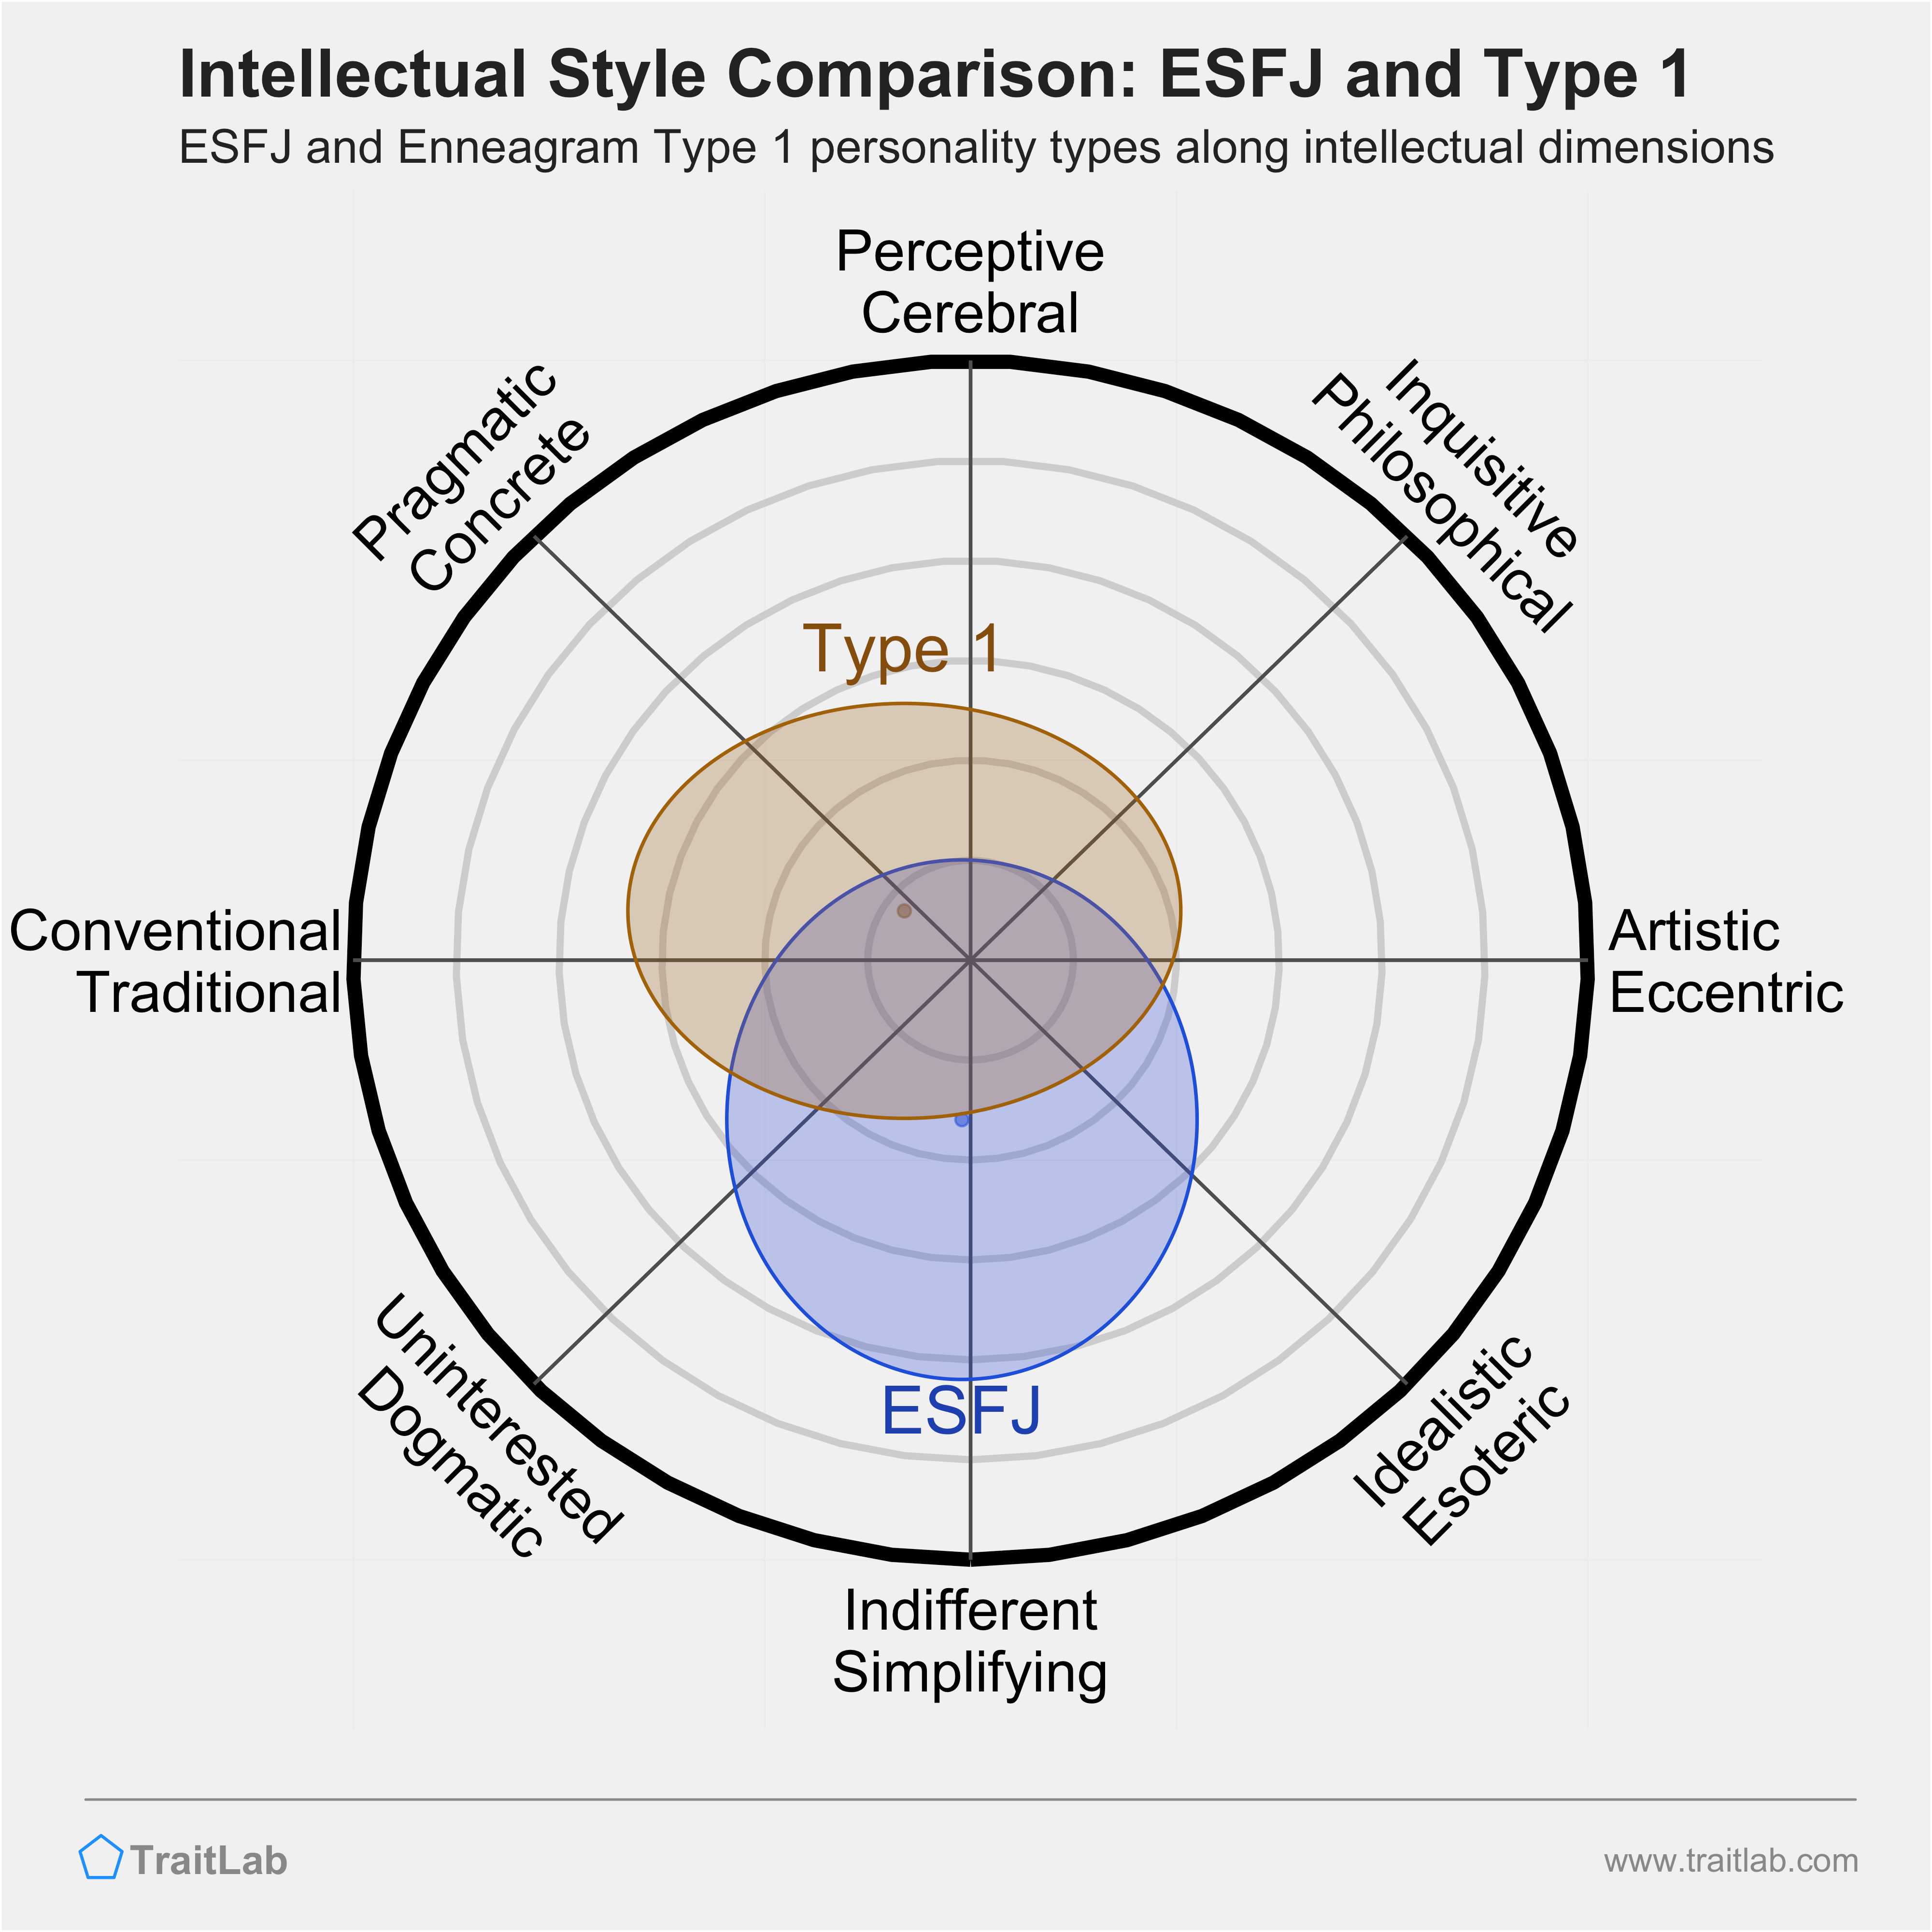 ESFJ and Type 1 comparison across intellectual dimensions